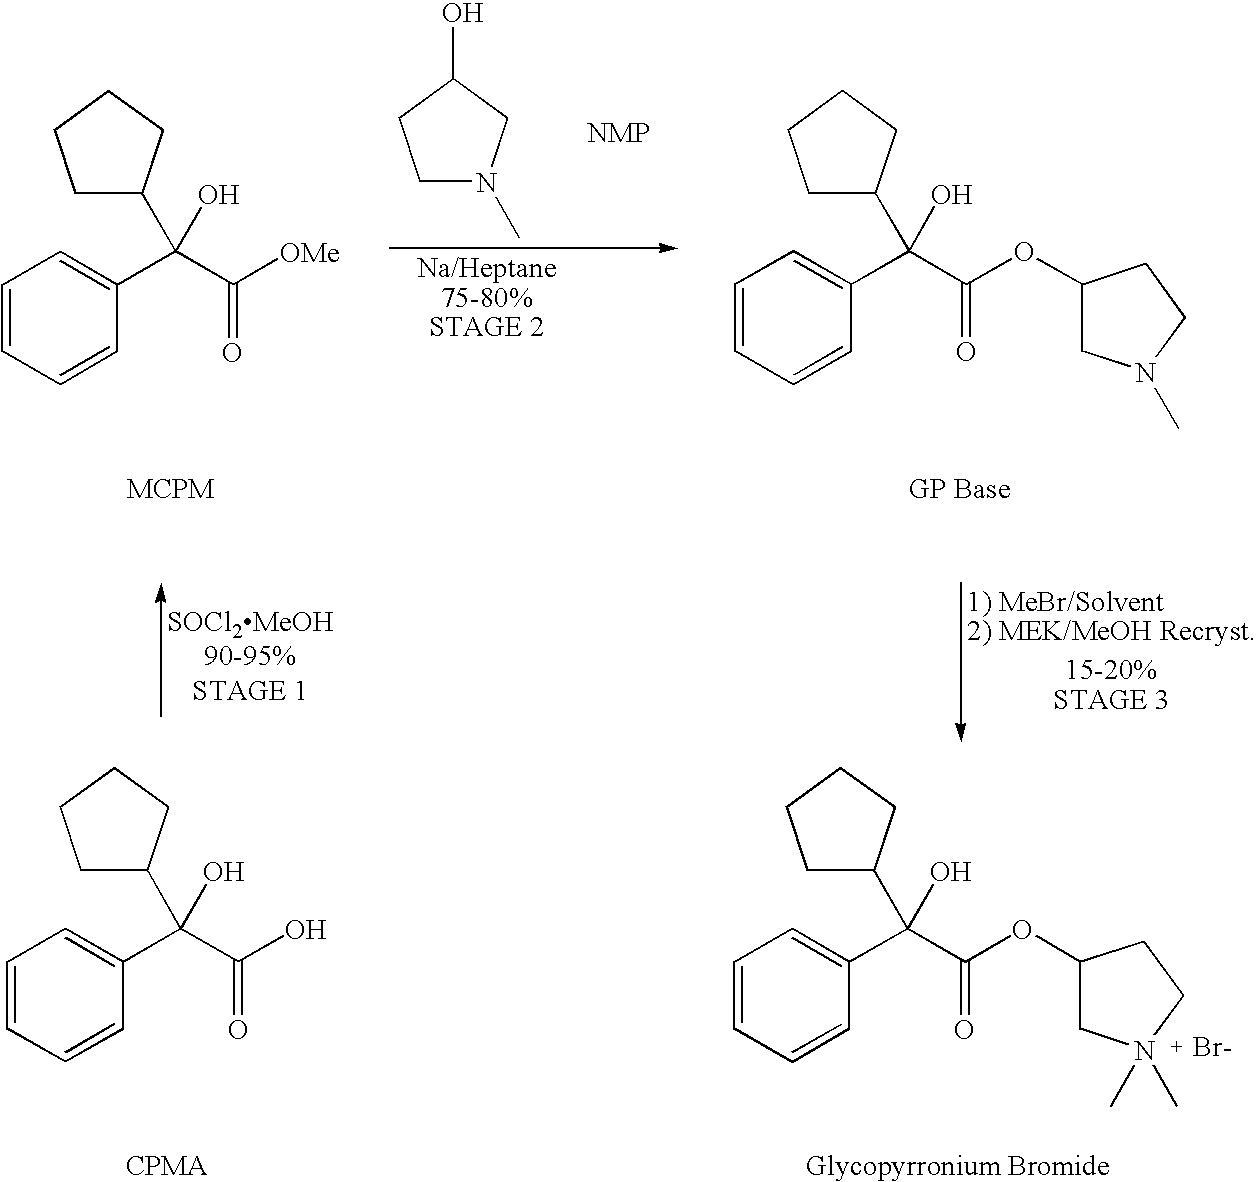 Crystallisation and Purification of Glycopyrronium Bromide